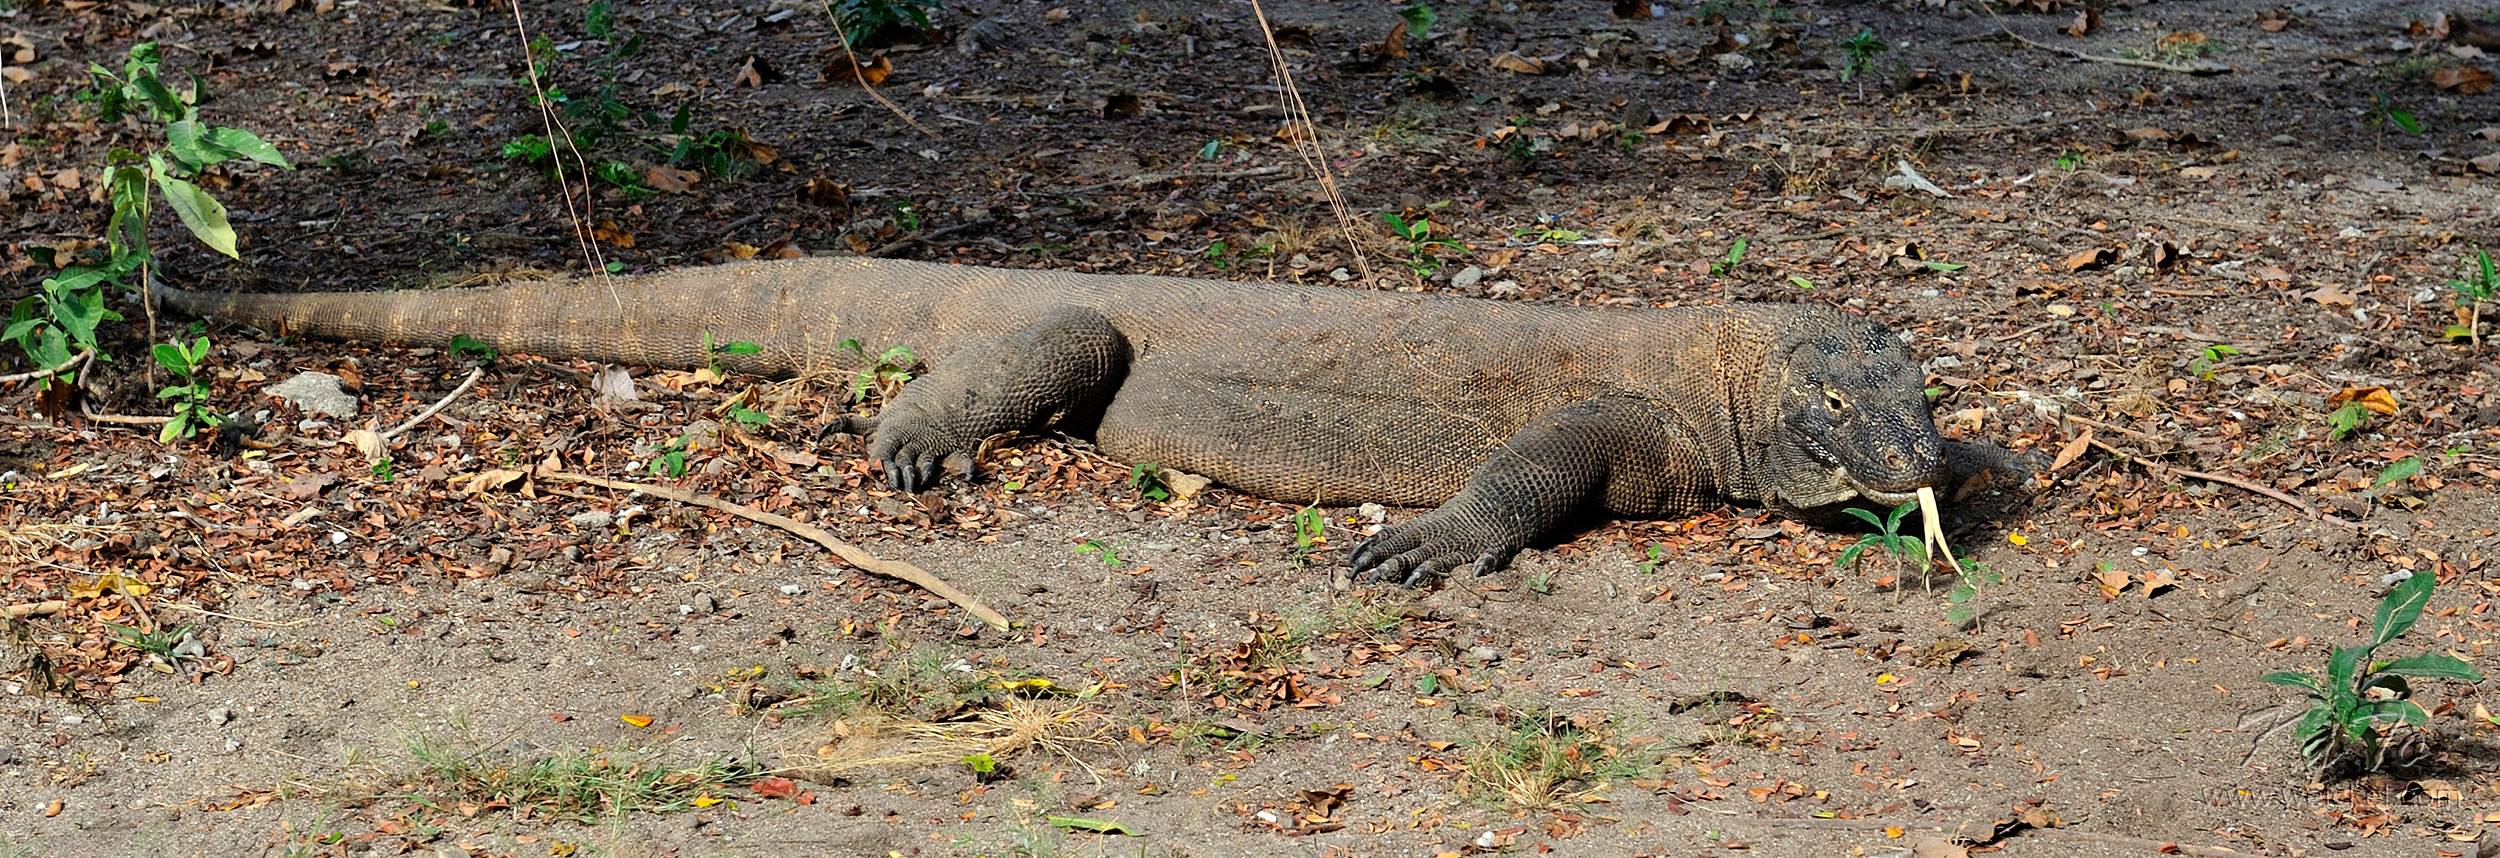 Komodo Dragon (Waran) on Komodo Island